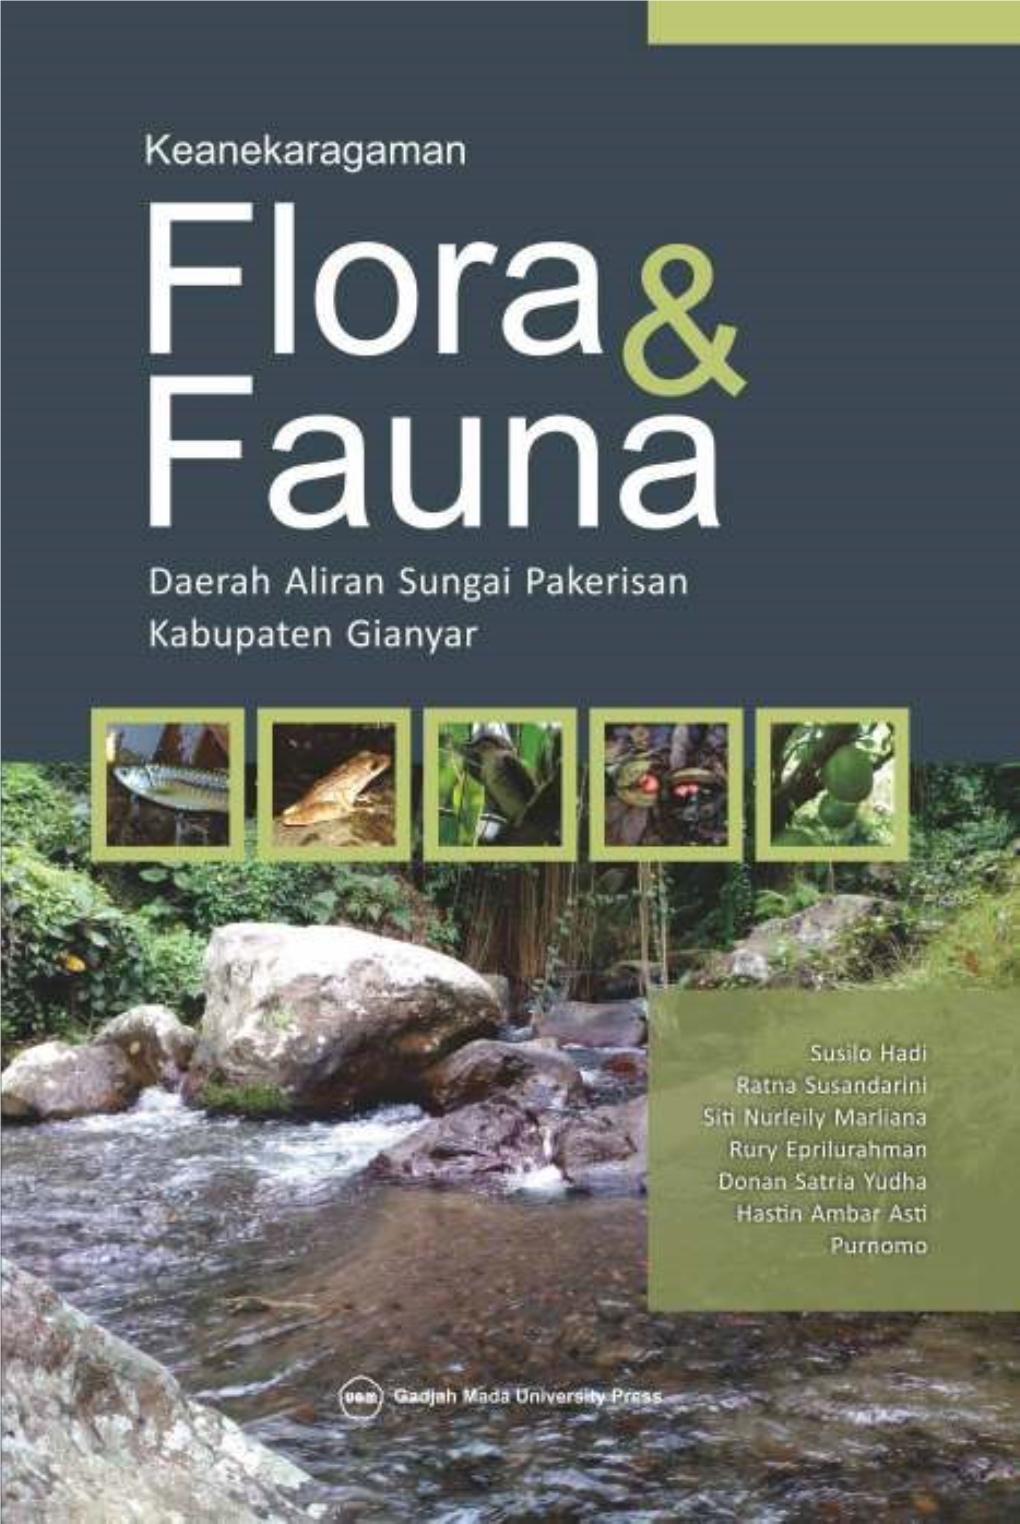 Keanekaragaman Flora Dan Fauna Daerah Aliran Sungai Pakerisan Kabupaten Gianyar Keanekaragaman Flora Dan Fauna Daerah Aliran Sungai Pakerisan Kabupaten Gianyar